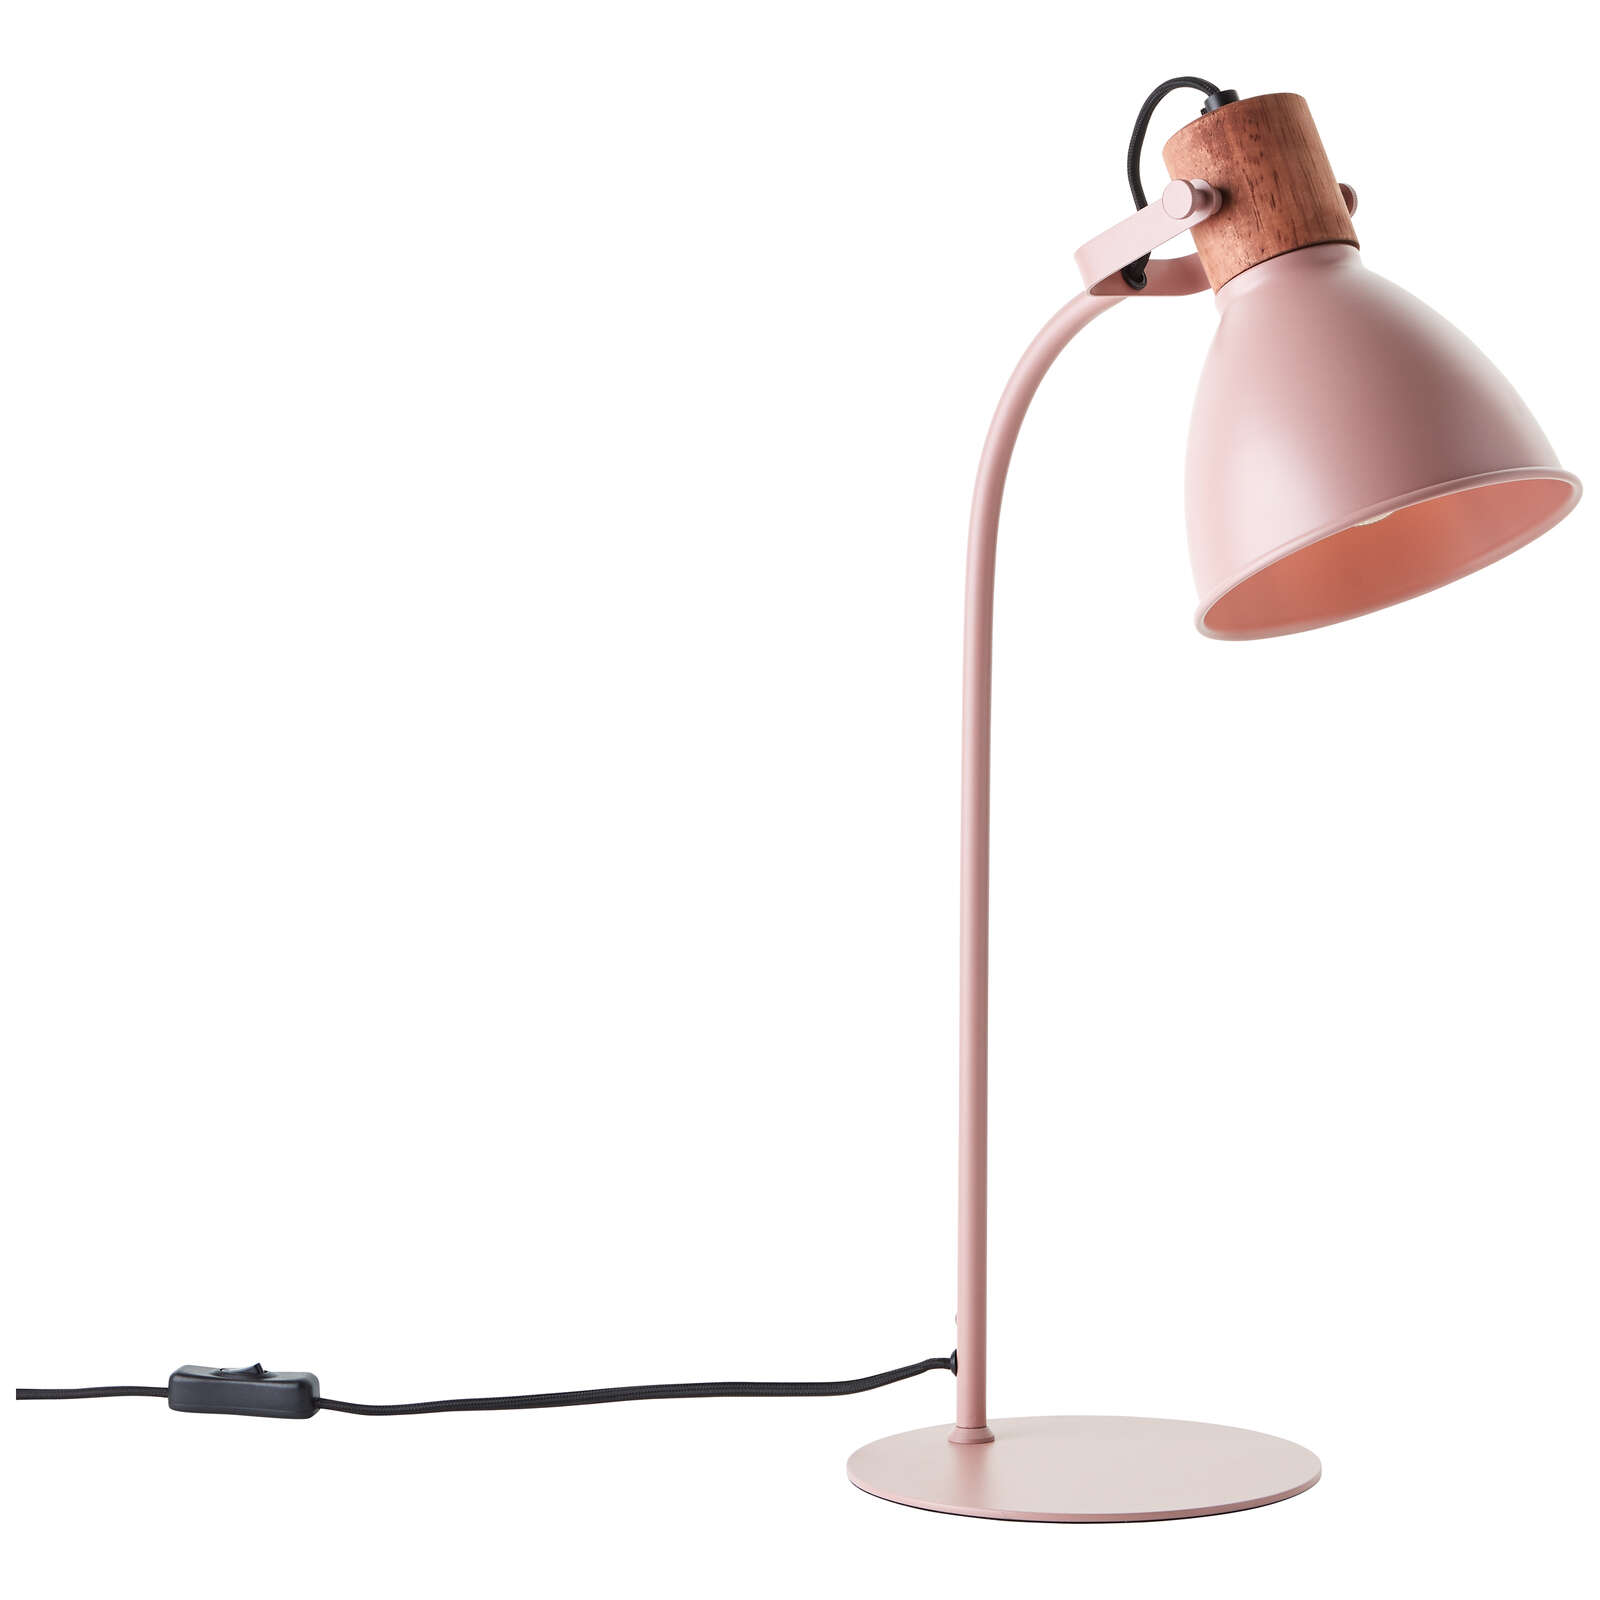             Houten tafellamp - Franziska 1 - Roze
        